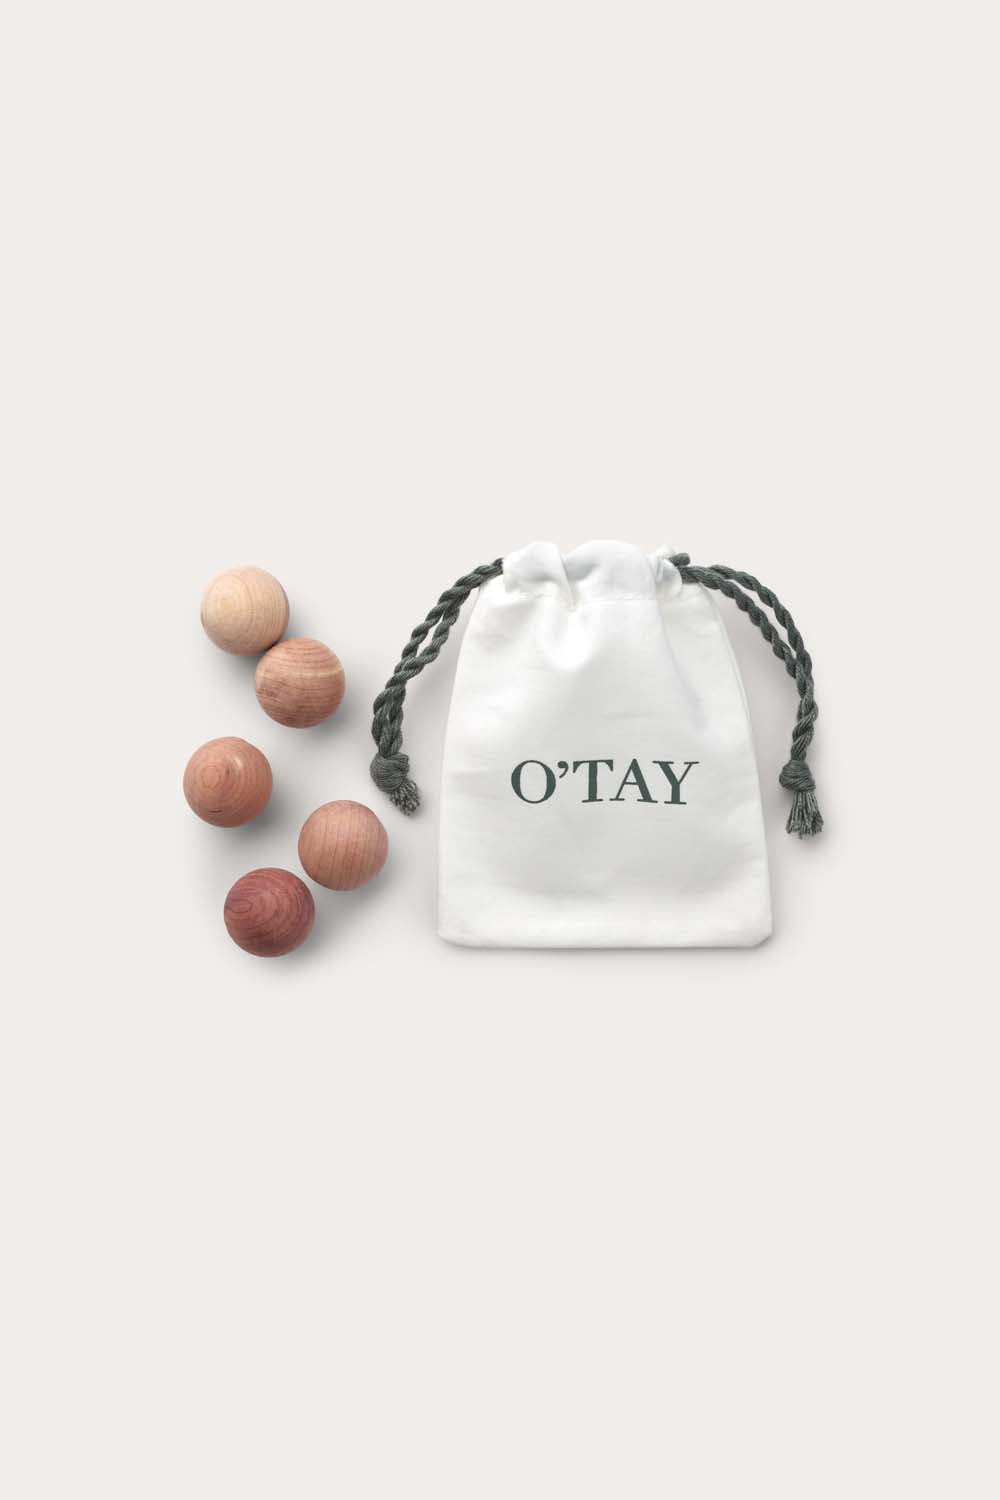 O'TAY Cedar Balls Care Products White